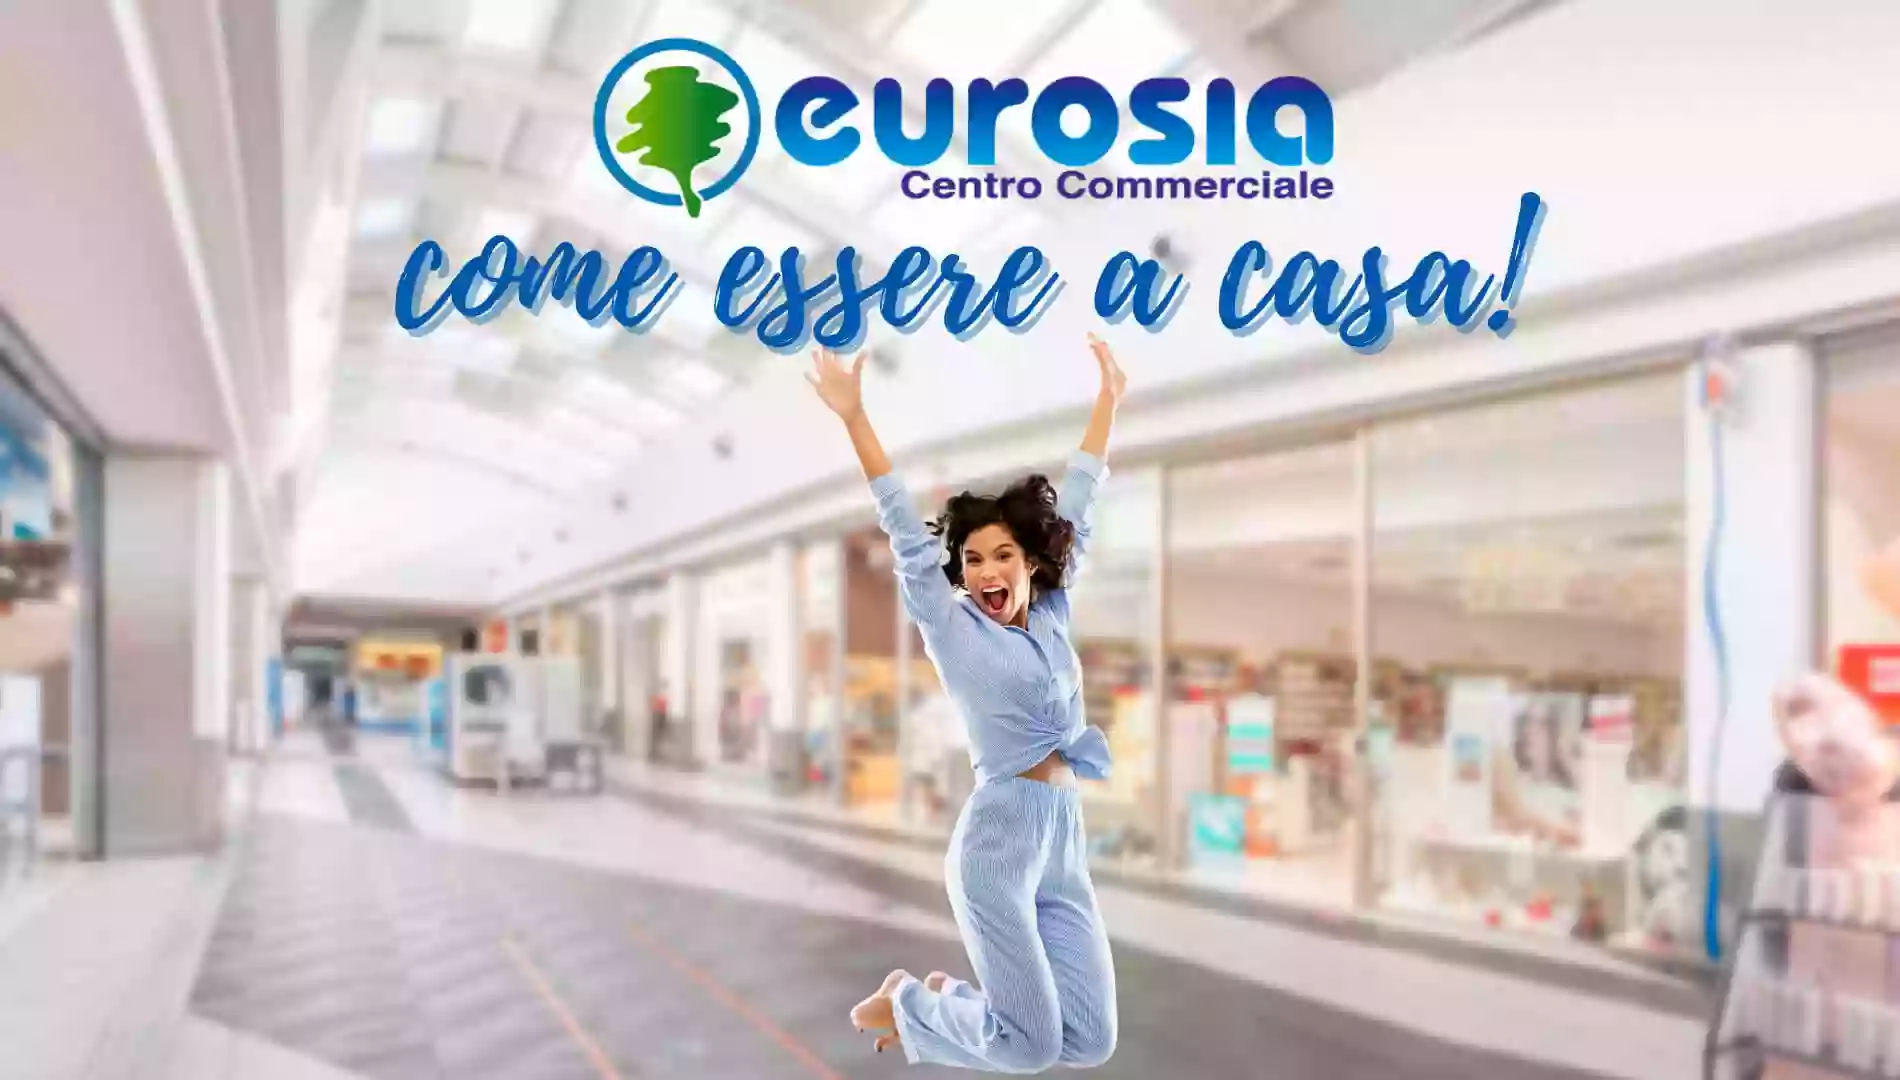 Centro Commerciale "Eurosia"